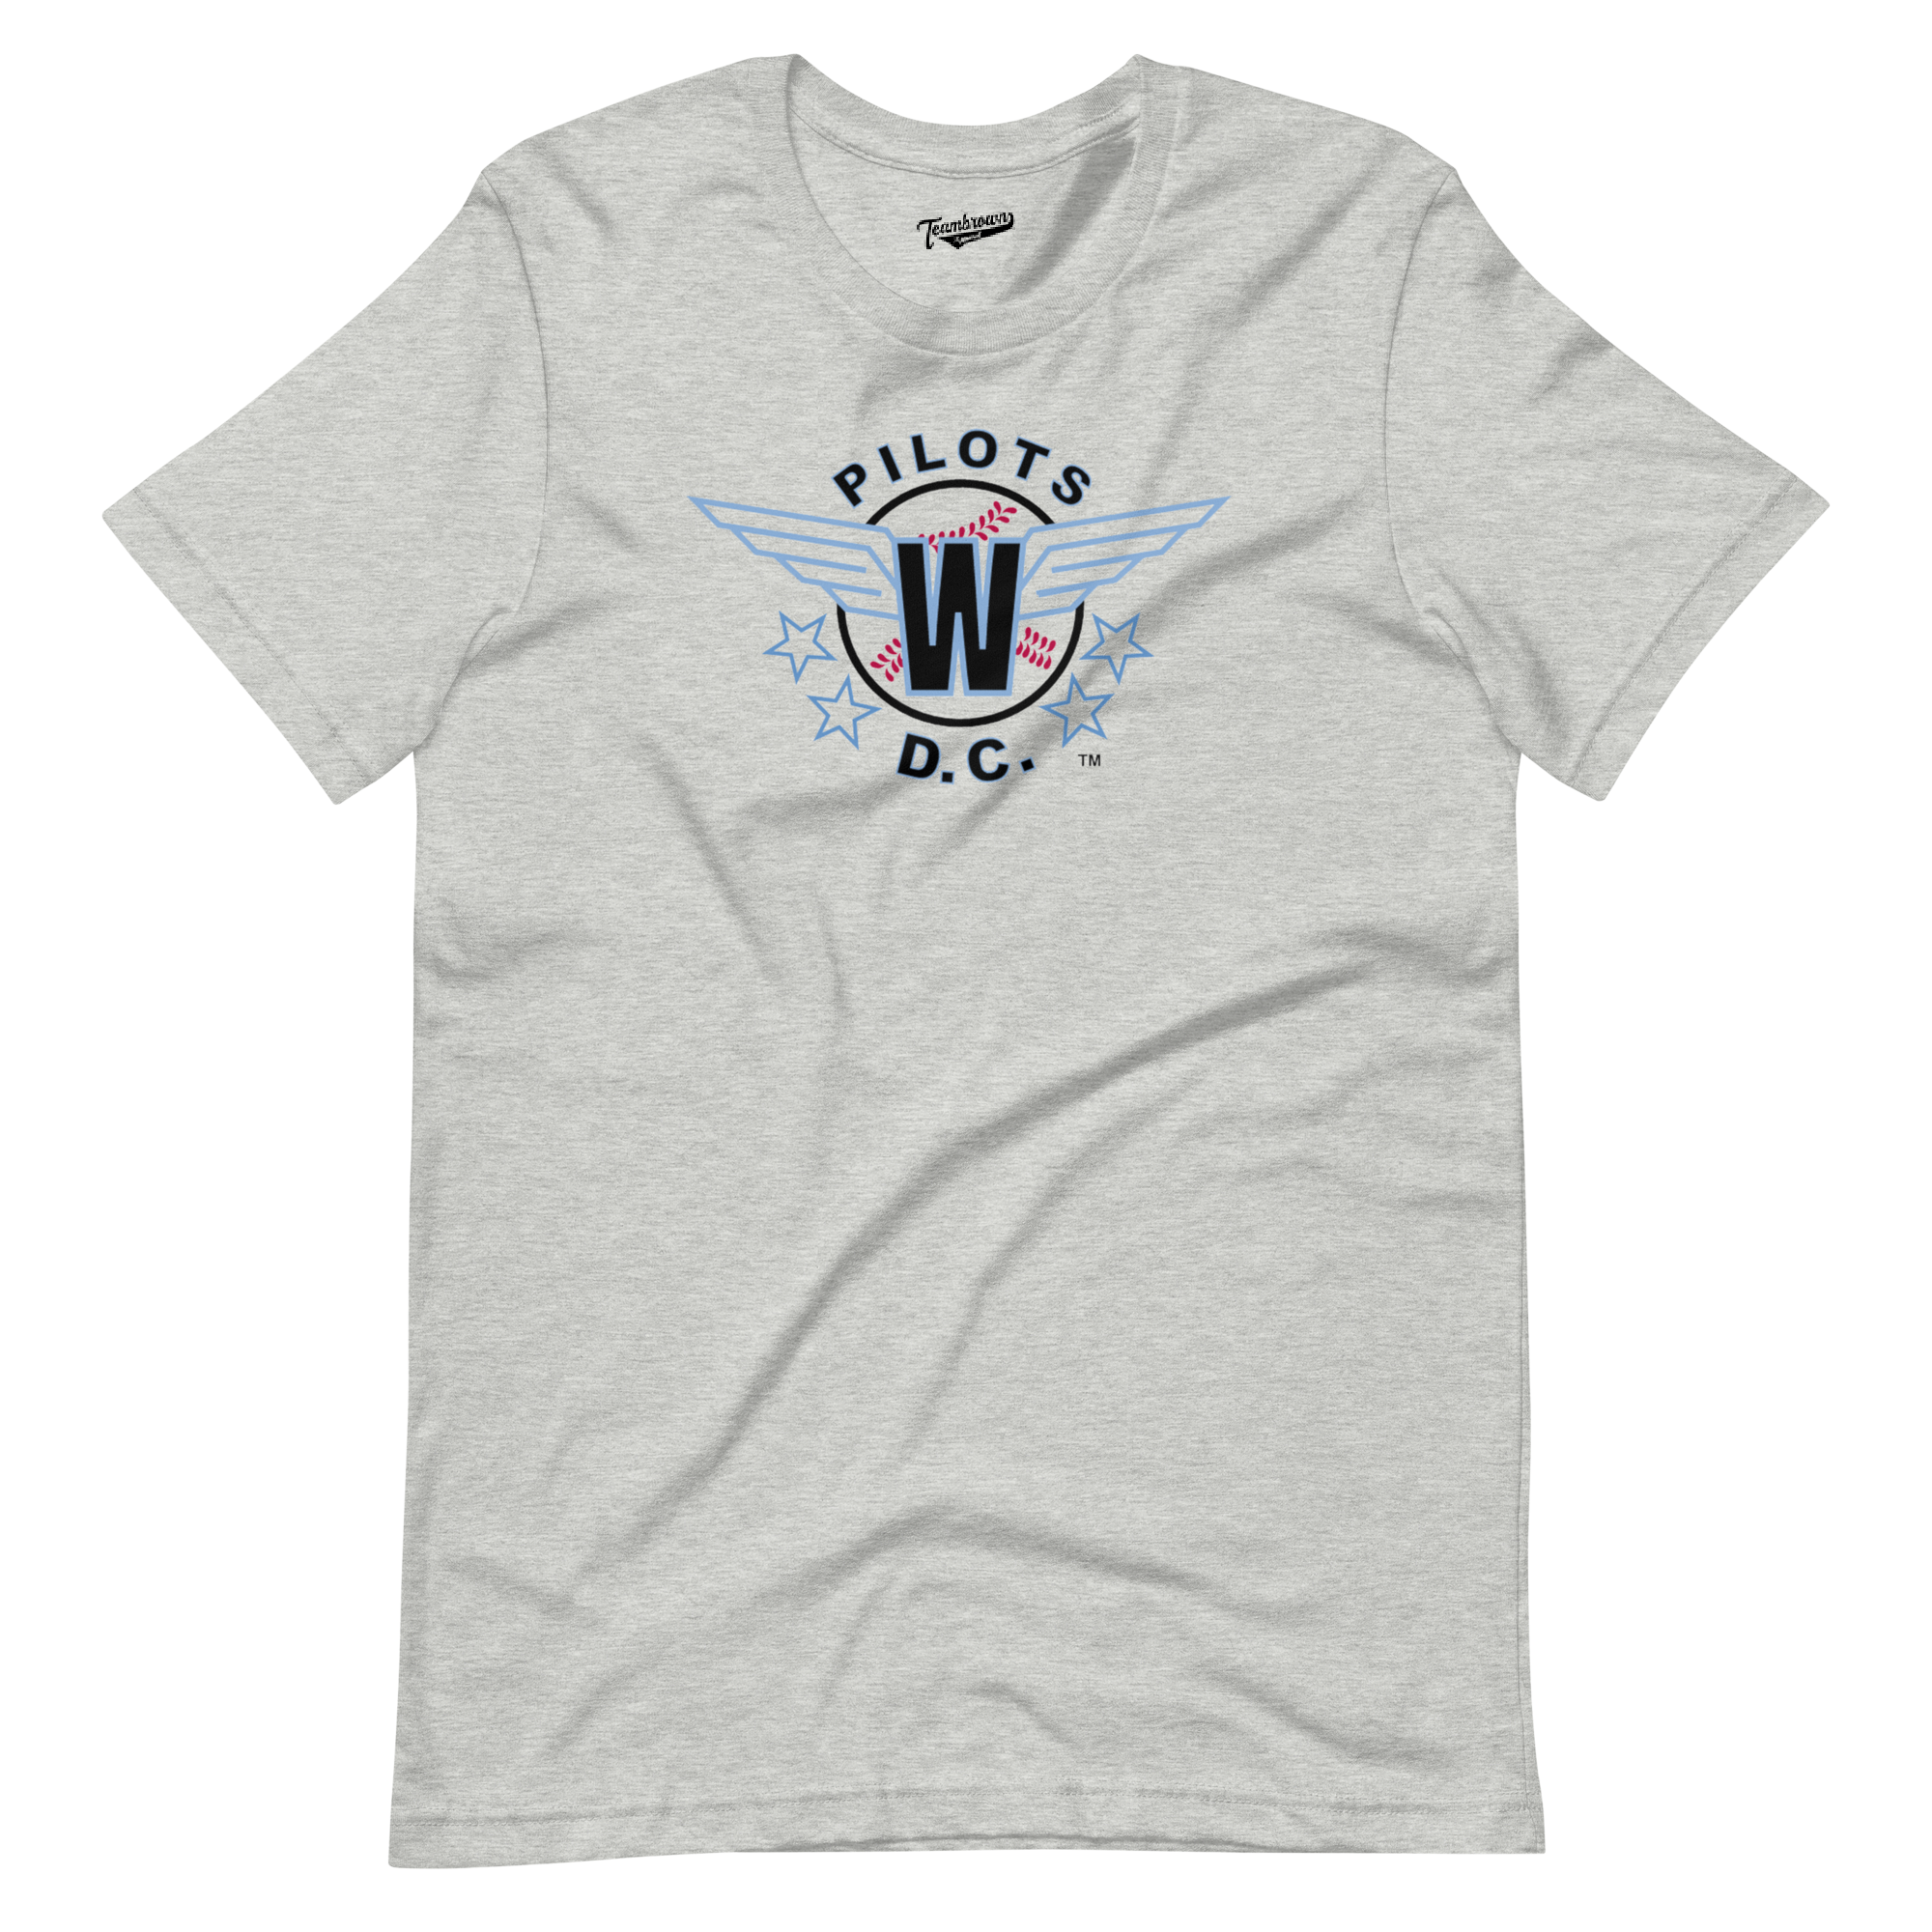 Washington Pilots - Unisex T-Shirt | Officially Licensed - NLBM